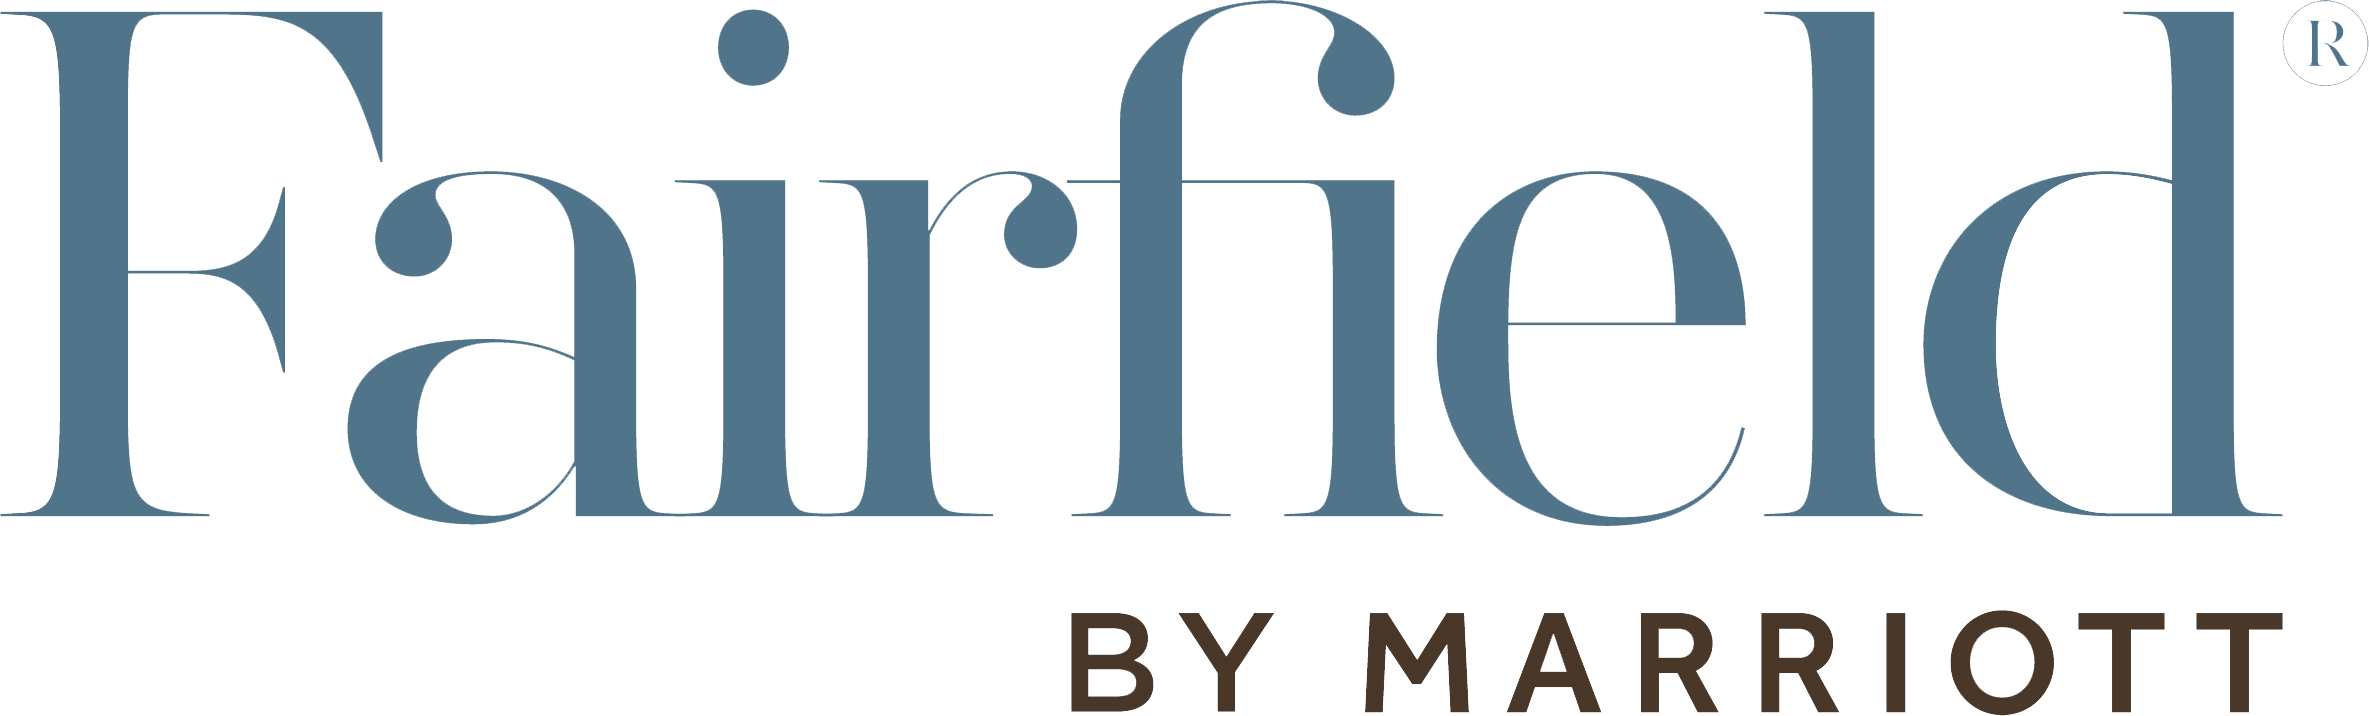 https://www.marriott.com/hotels/travel/mbsfm-fairfield-inn-and-suites-midland/